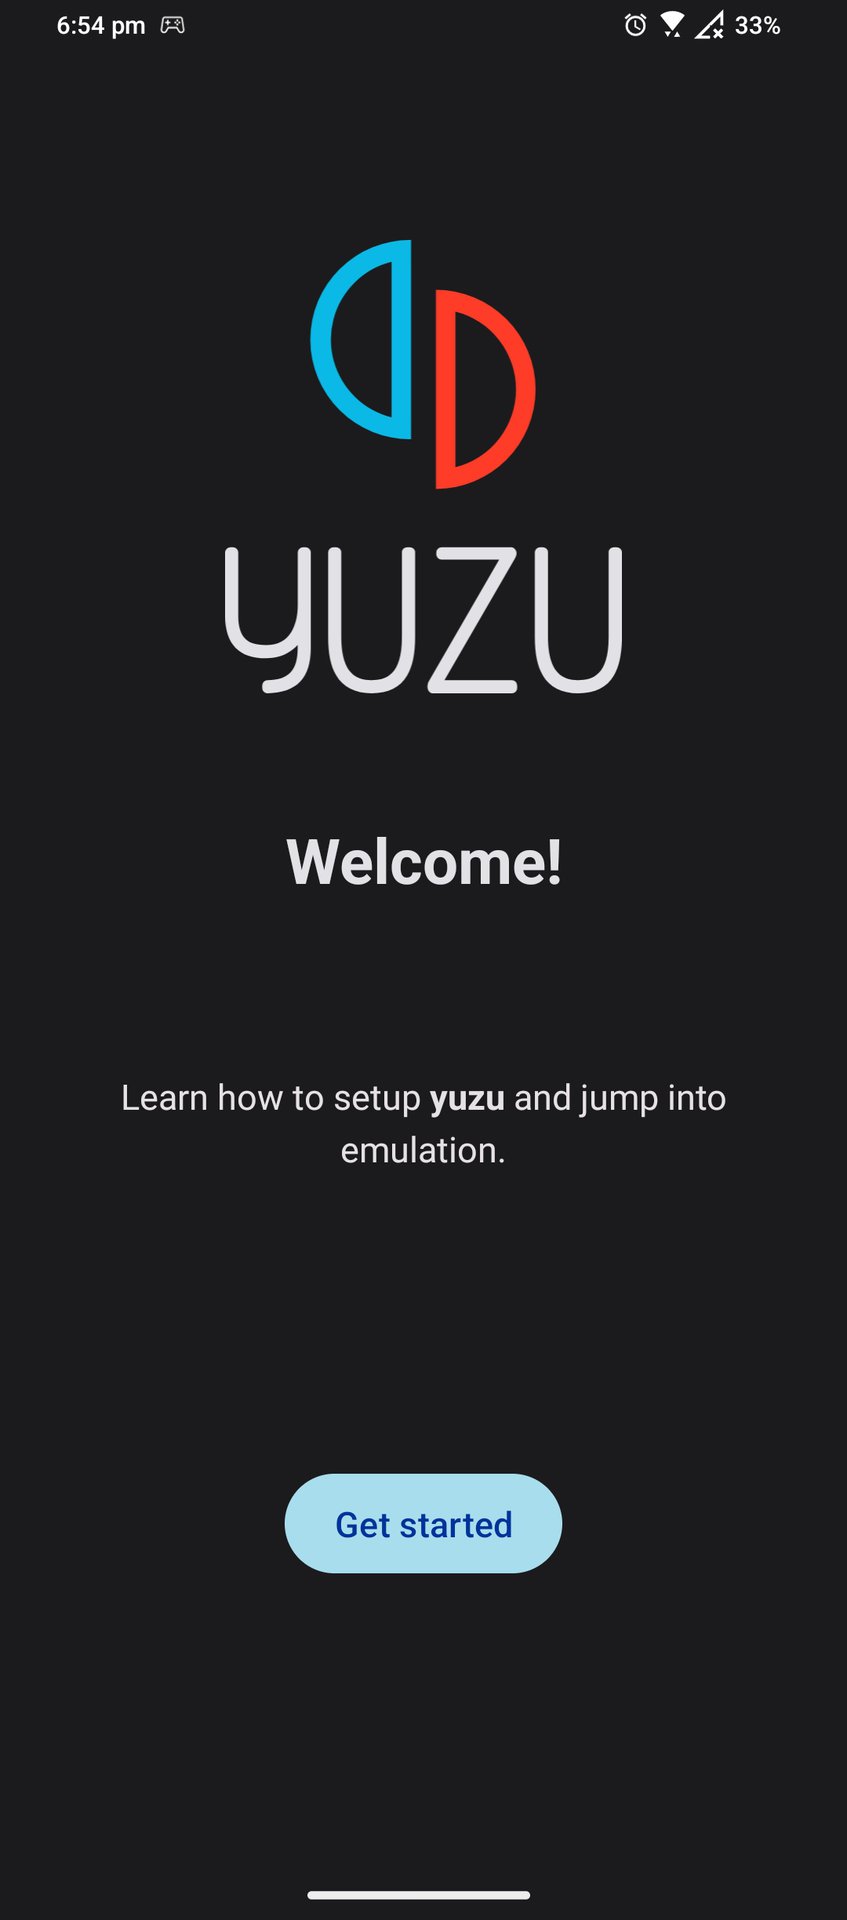 Yuzu emulator on Android Screenshot 1 8545